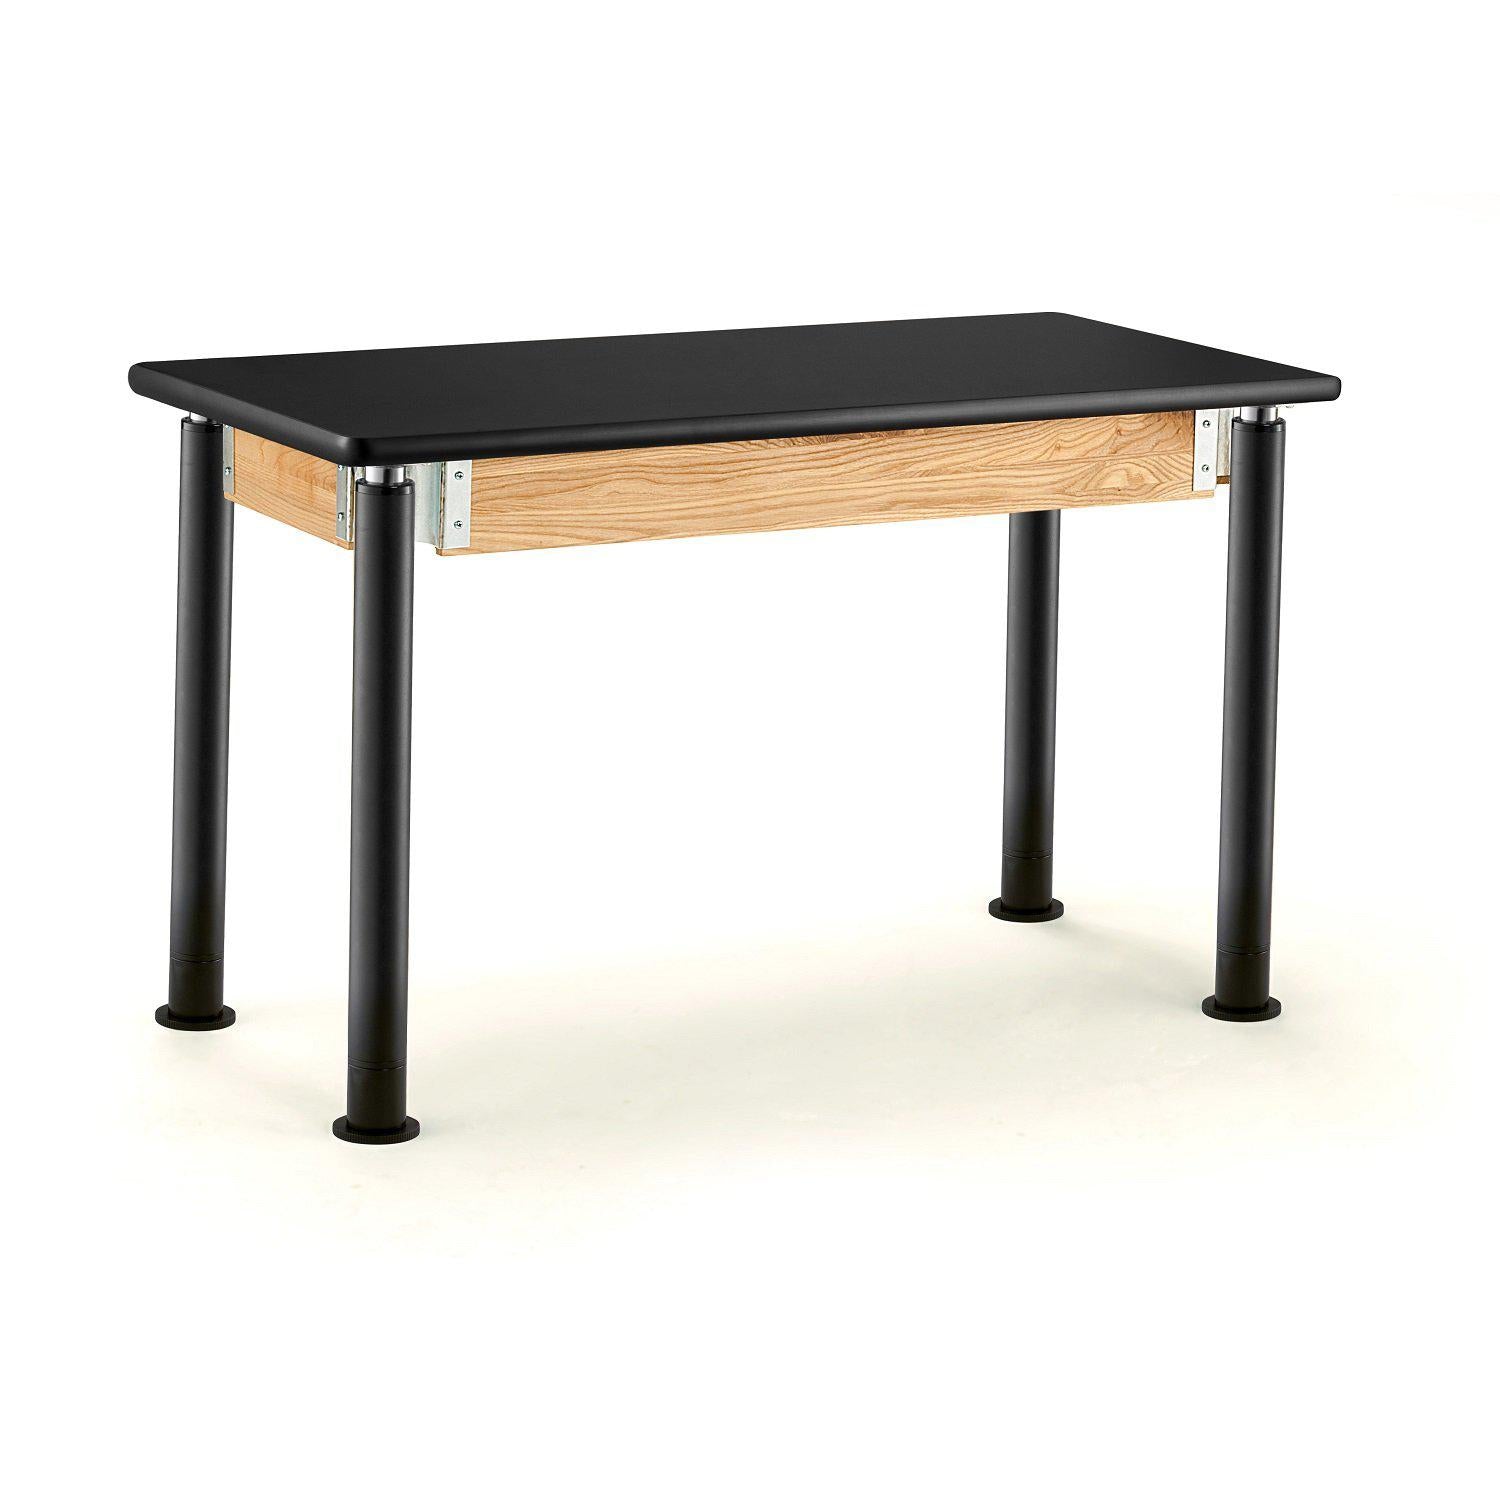 Signature Series Adjustable Height Science Lab Table, Textured Black Legs, 24"x72", Black High Pressure Laminate Top